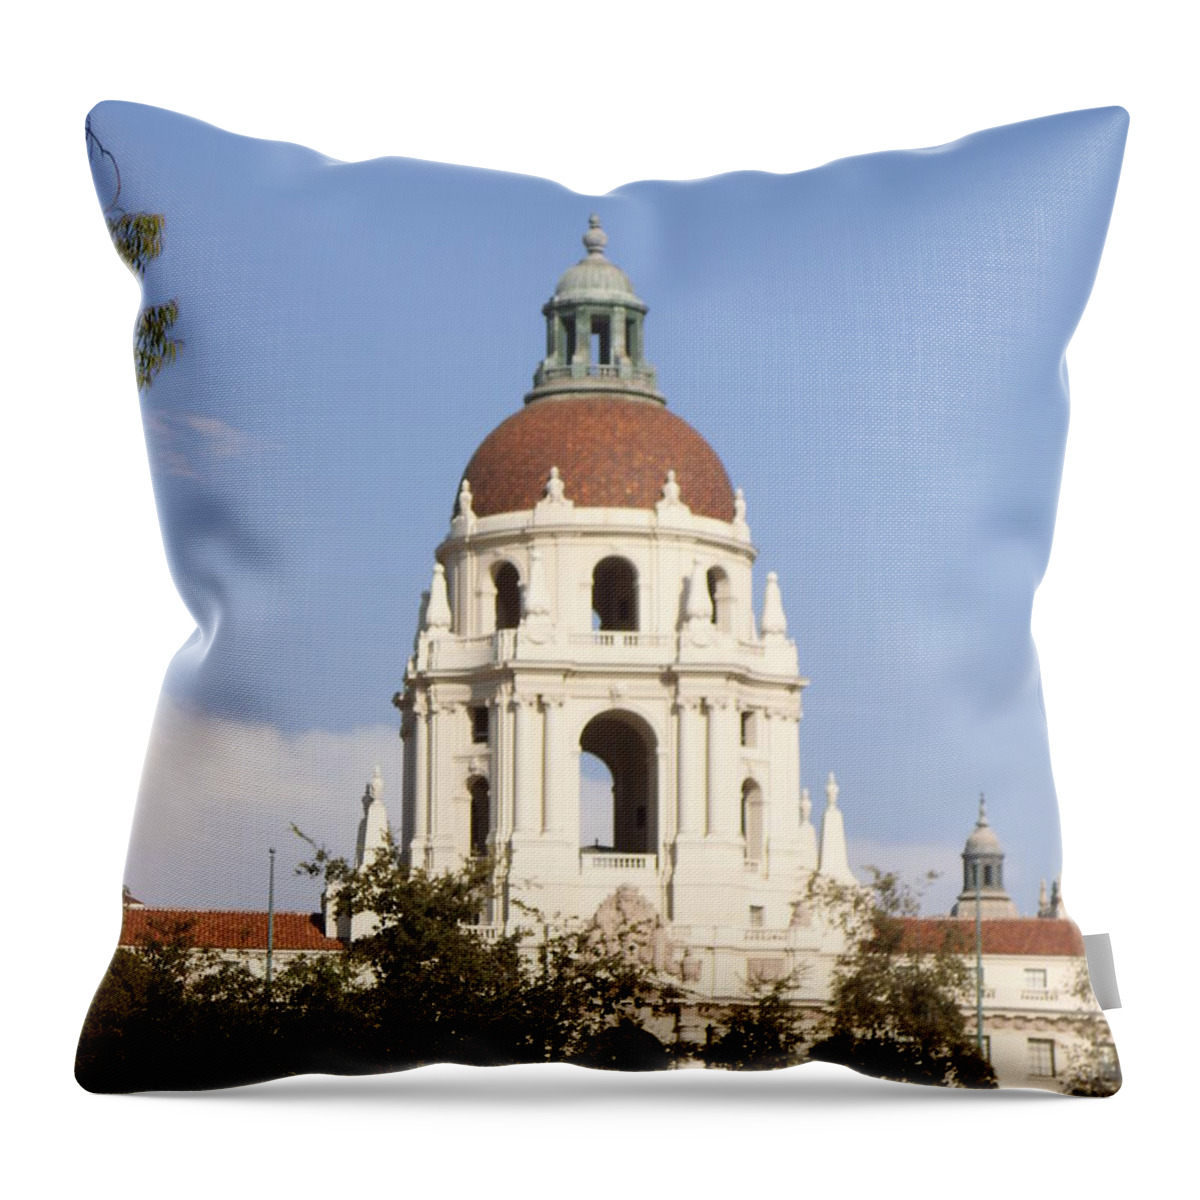  Throw Pillow featuring the photograph Pasadena City Hall by Heather E Harman